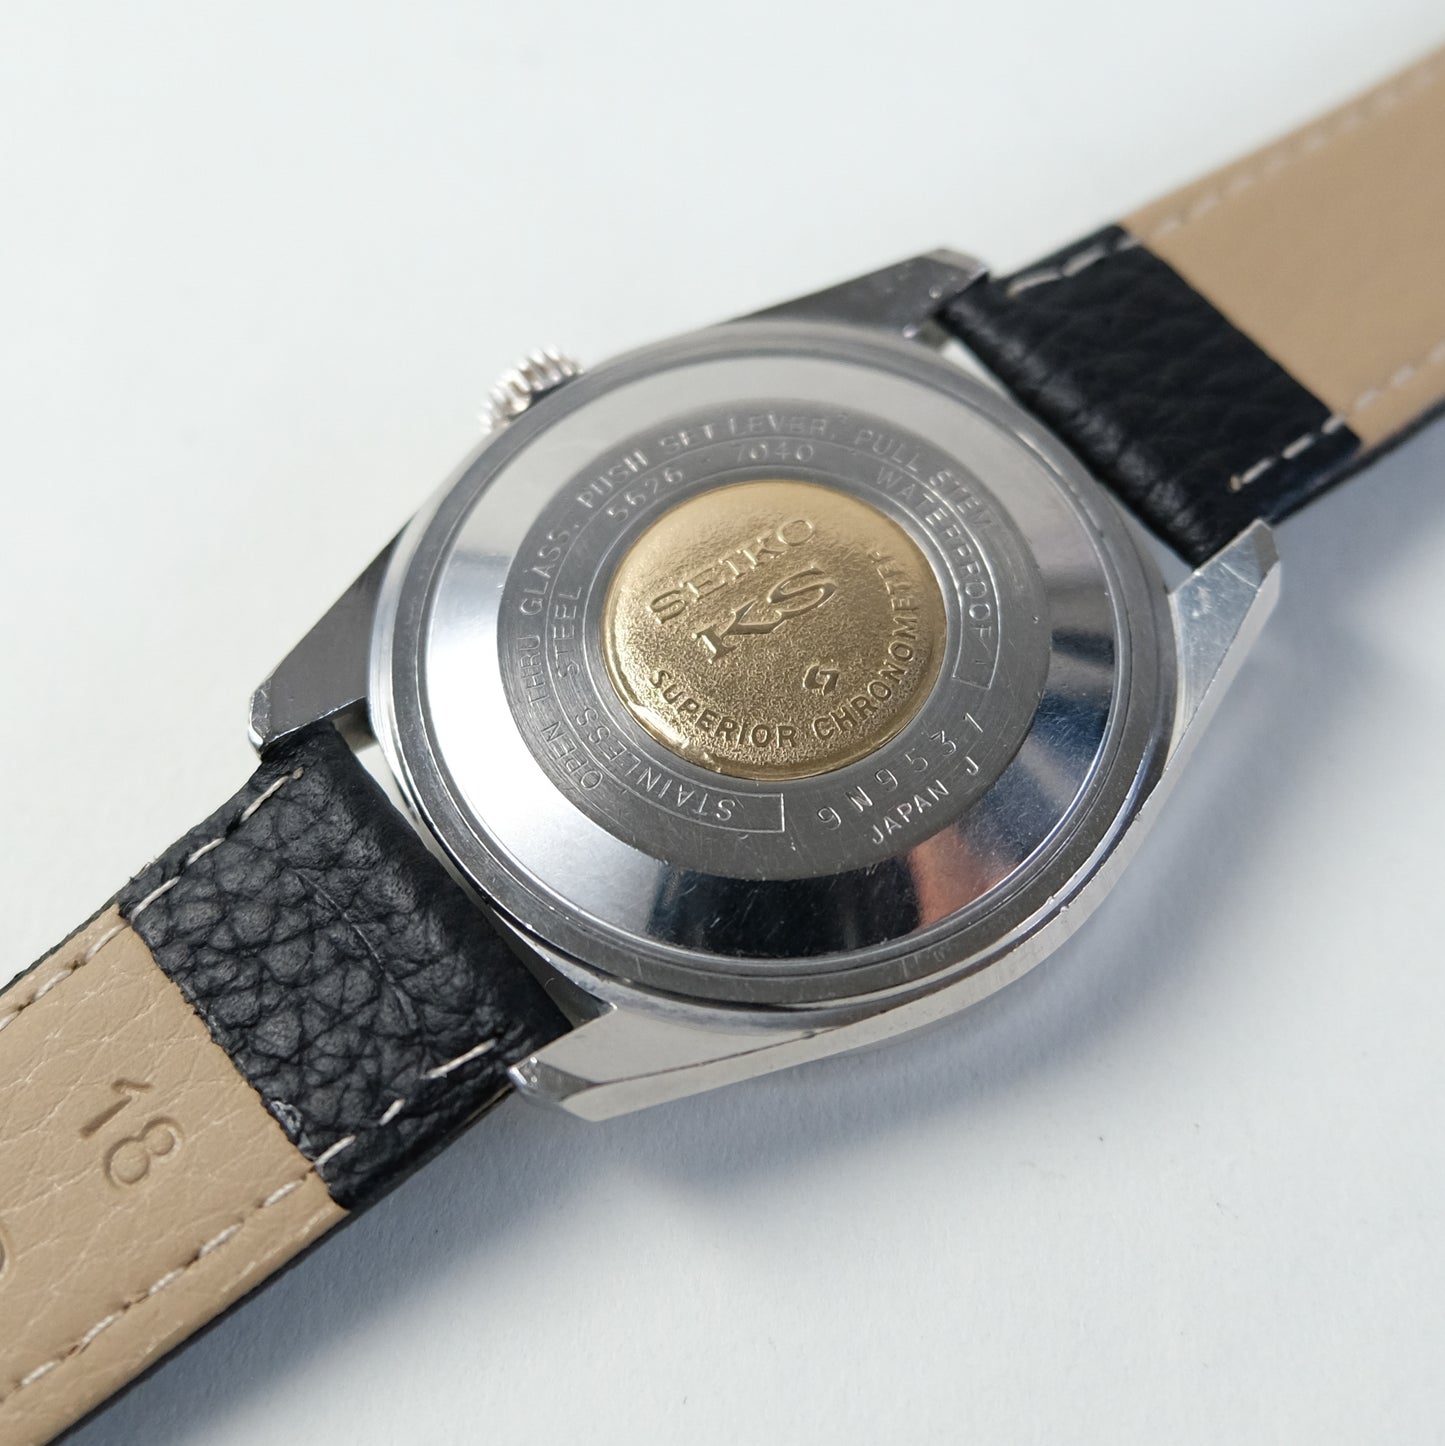 1969 Seiko KS Chronometer Officially Certified 5626-7040